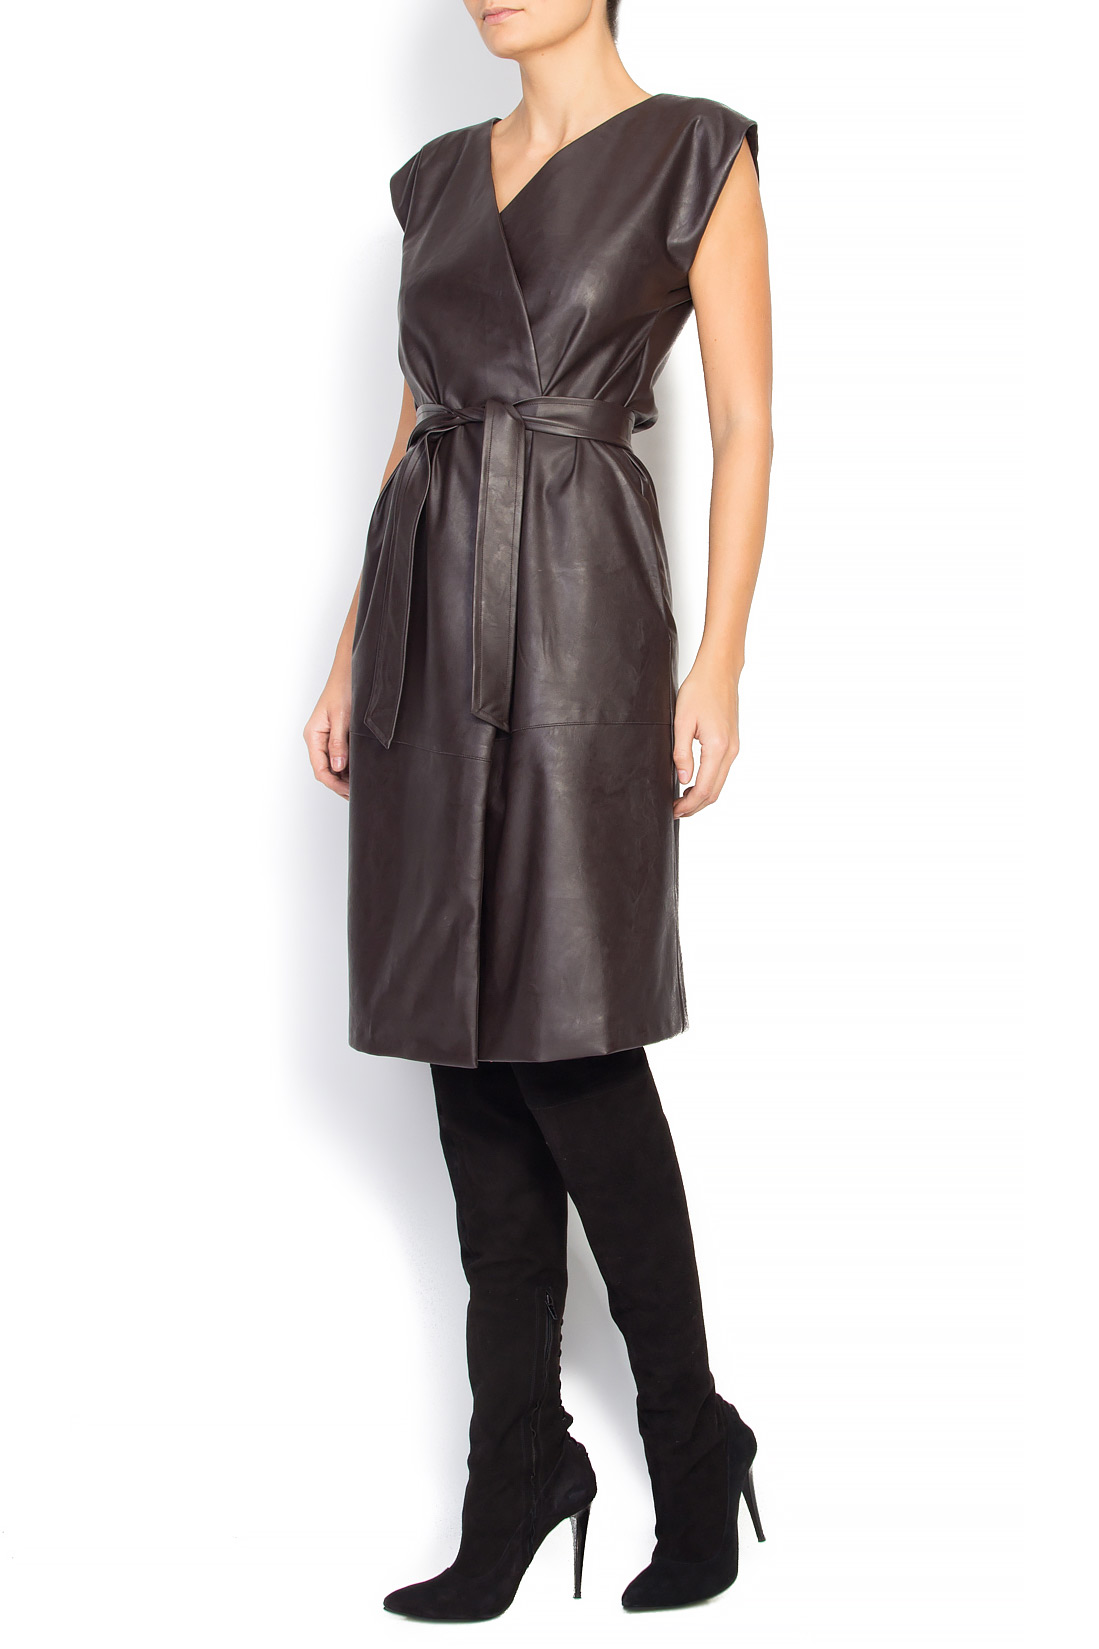 Faux leather wrap dress Lure image 2